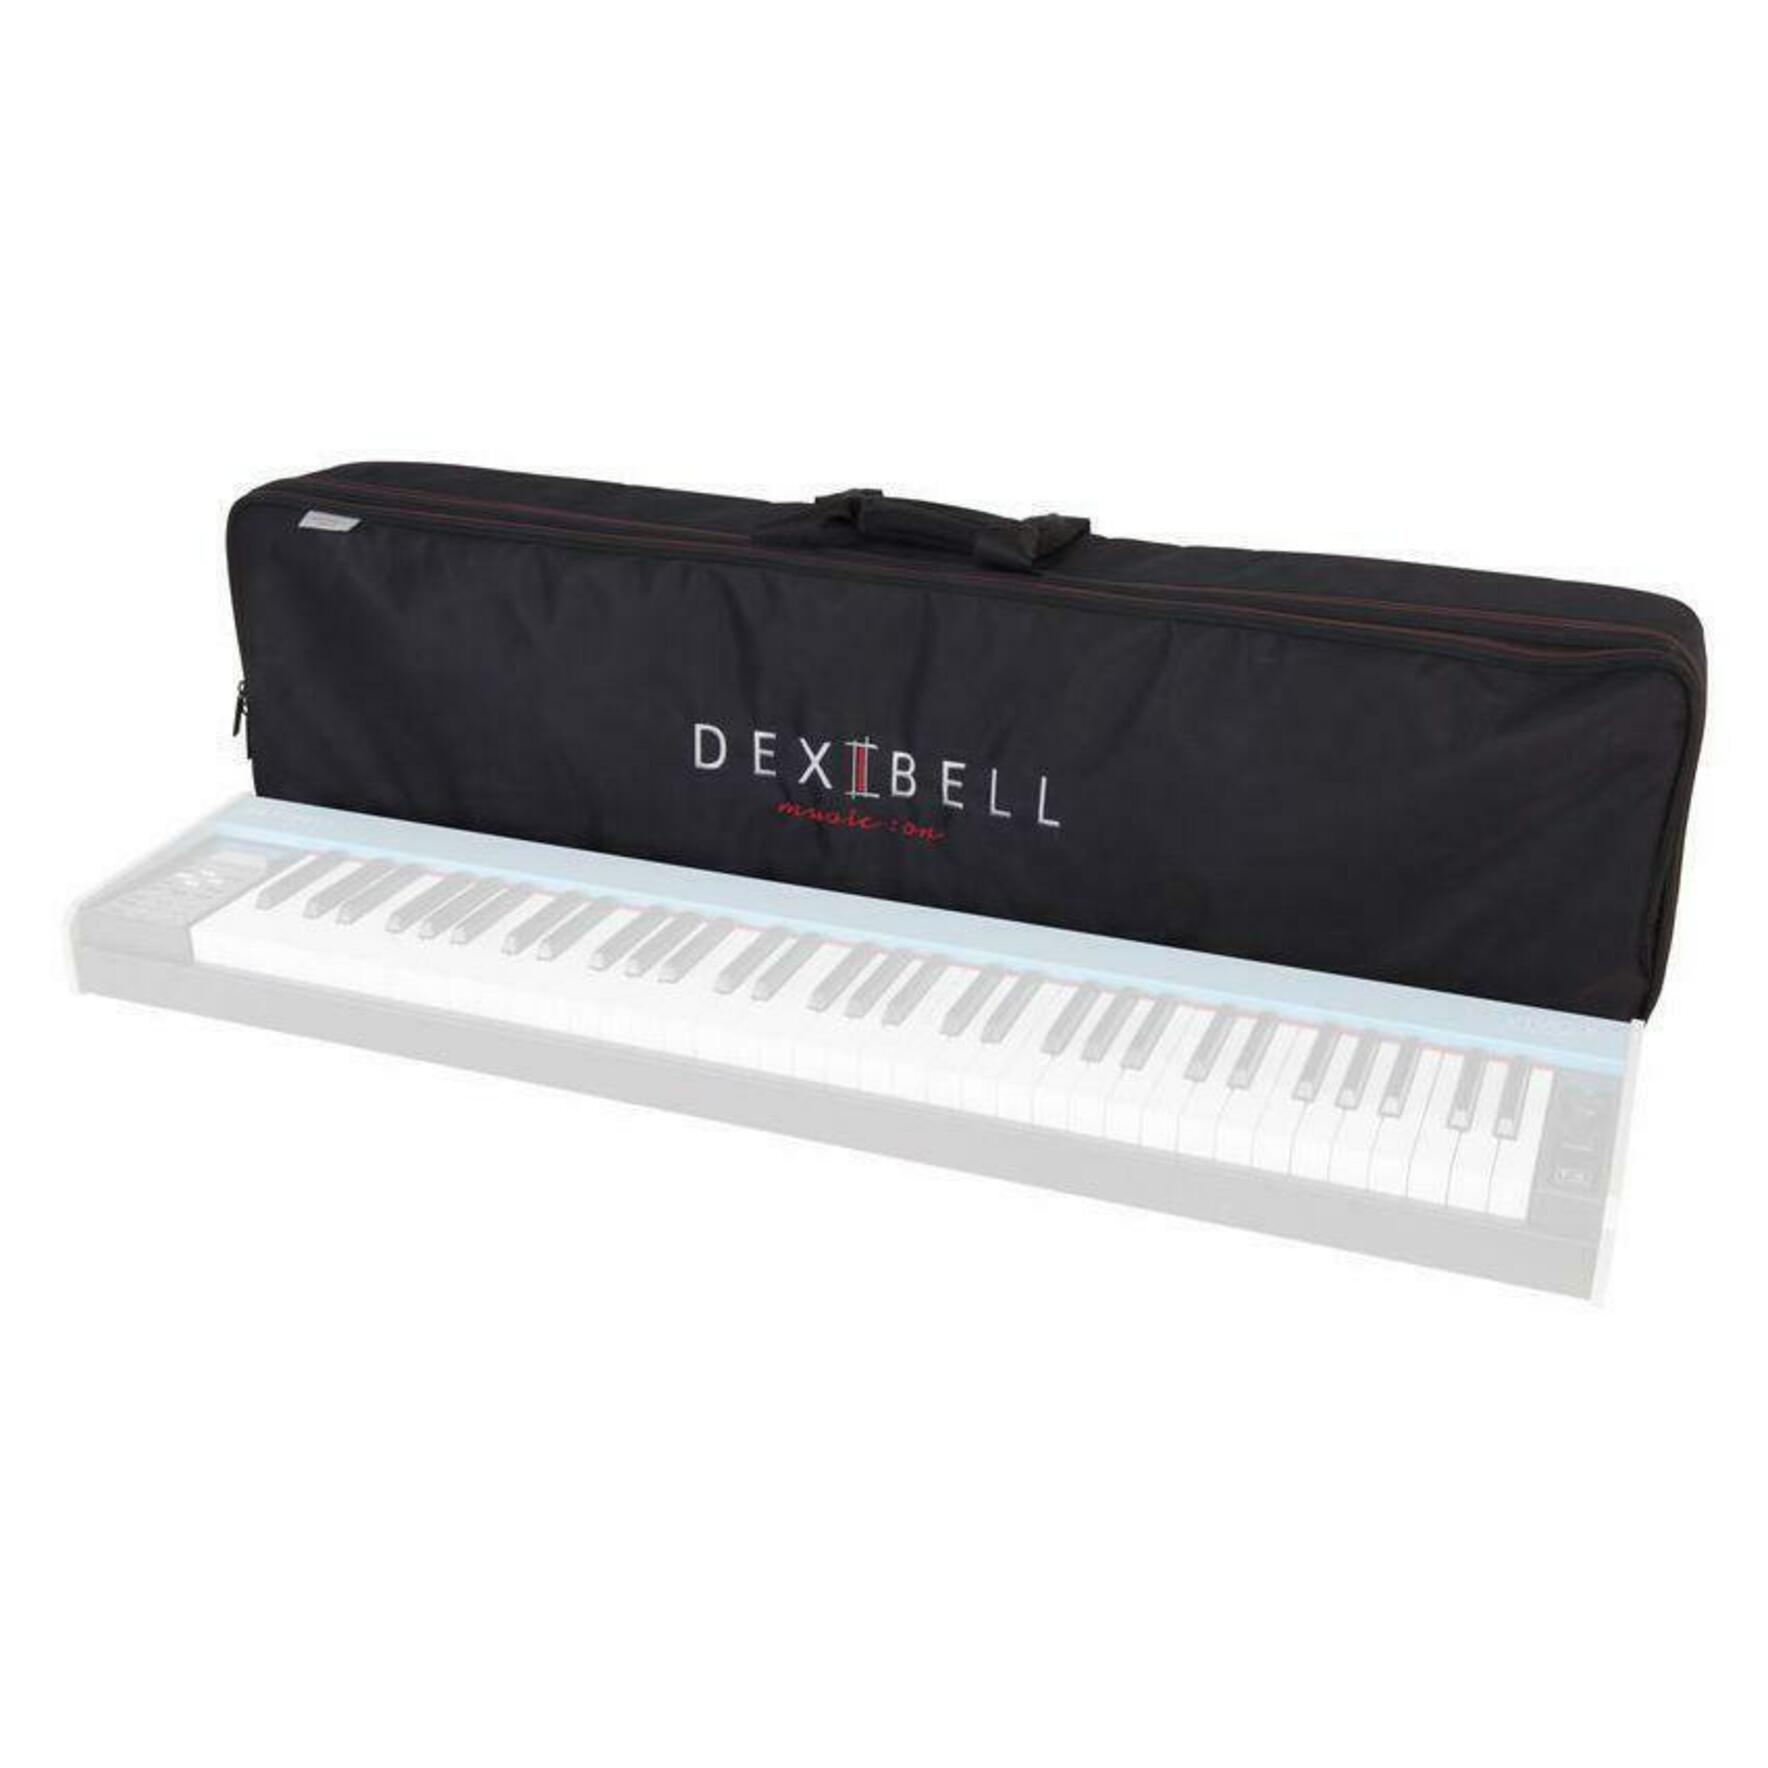 Чехлы и кейсы для клавишных Dexibell Bag S1 (для VIVO S-1) чехлы и кейсы для клавишных dexibell s9 s7 pro bag